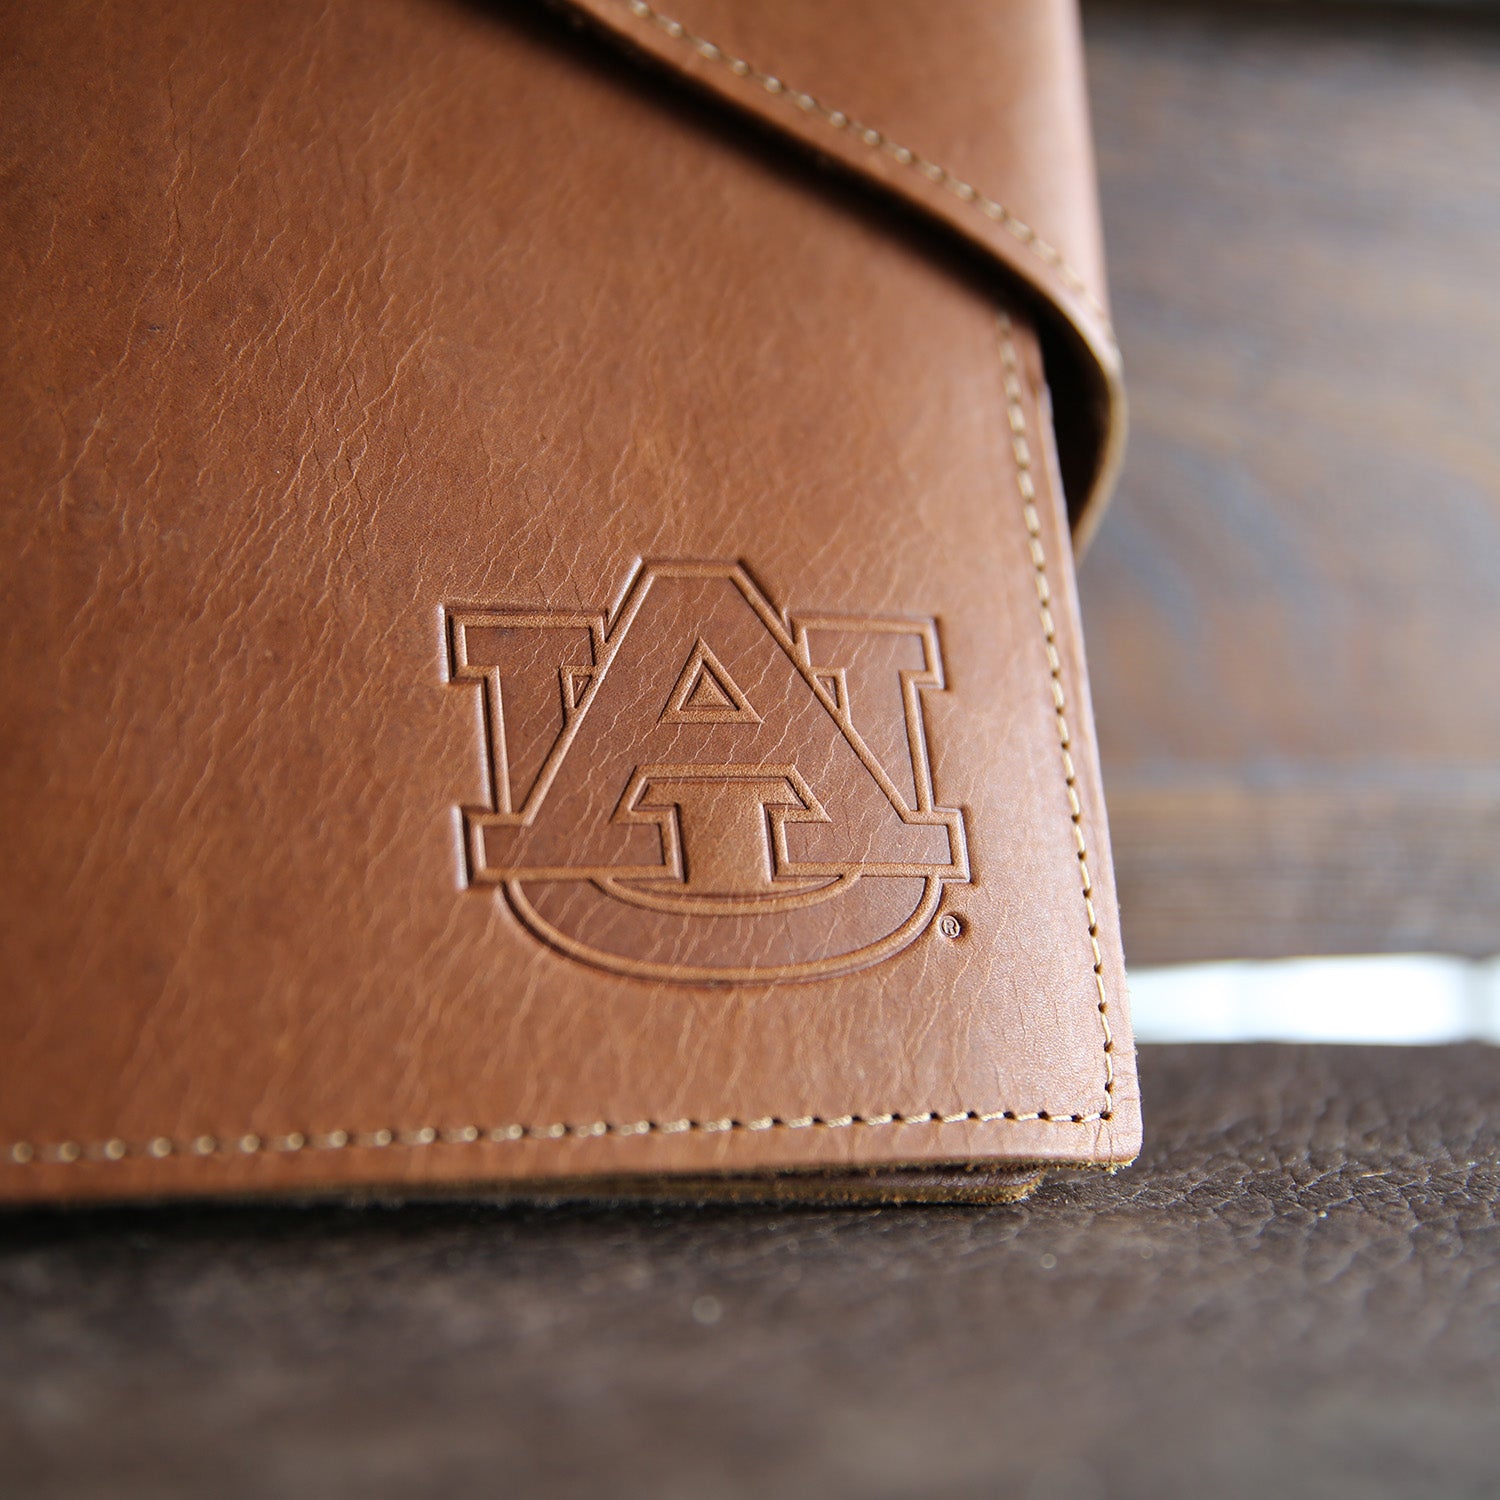 Fine leather 3 Ring Binder or photo album with Auburn University logo